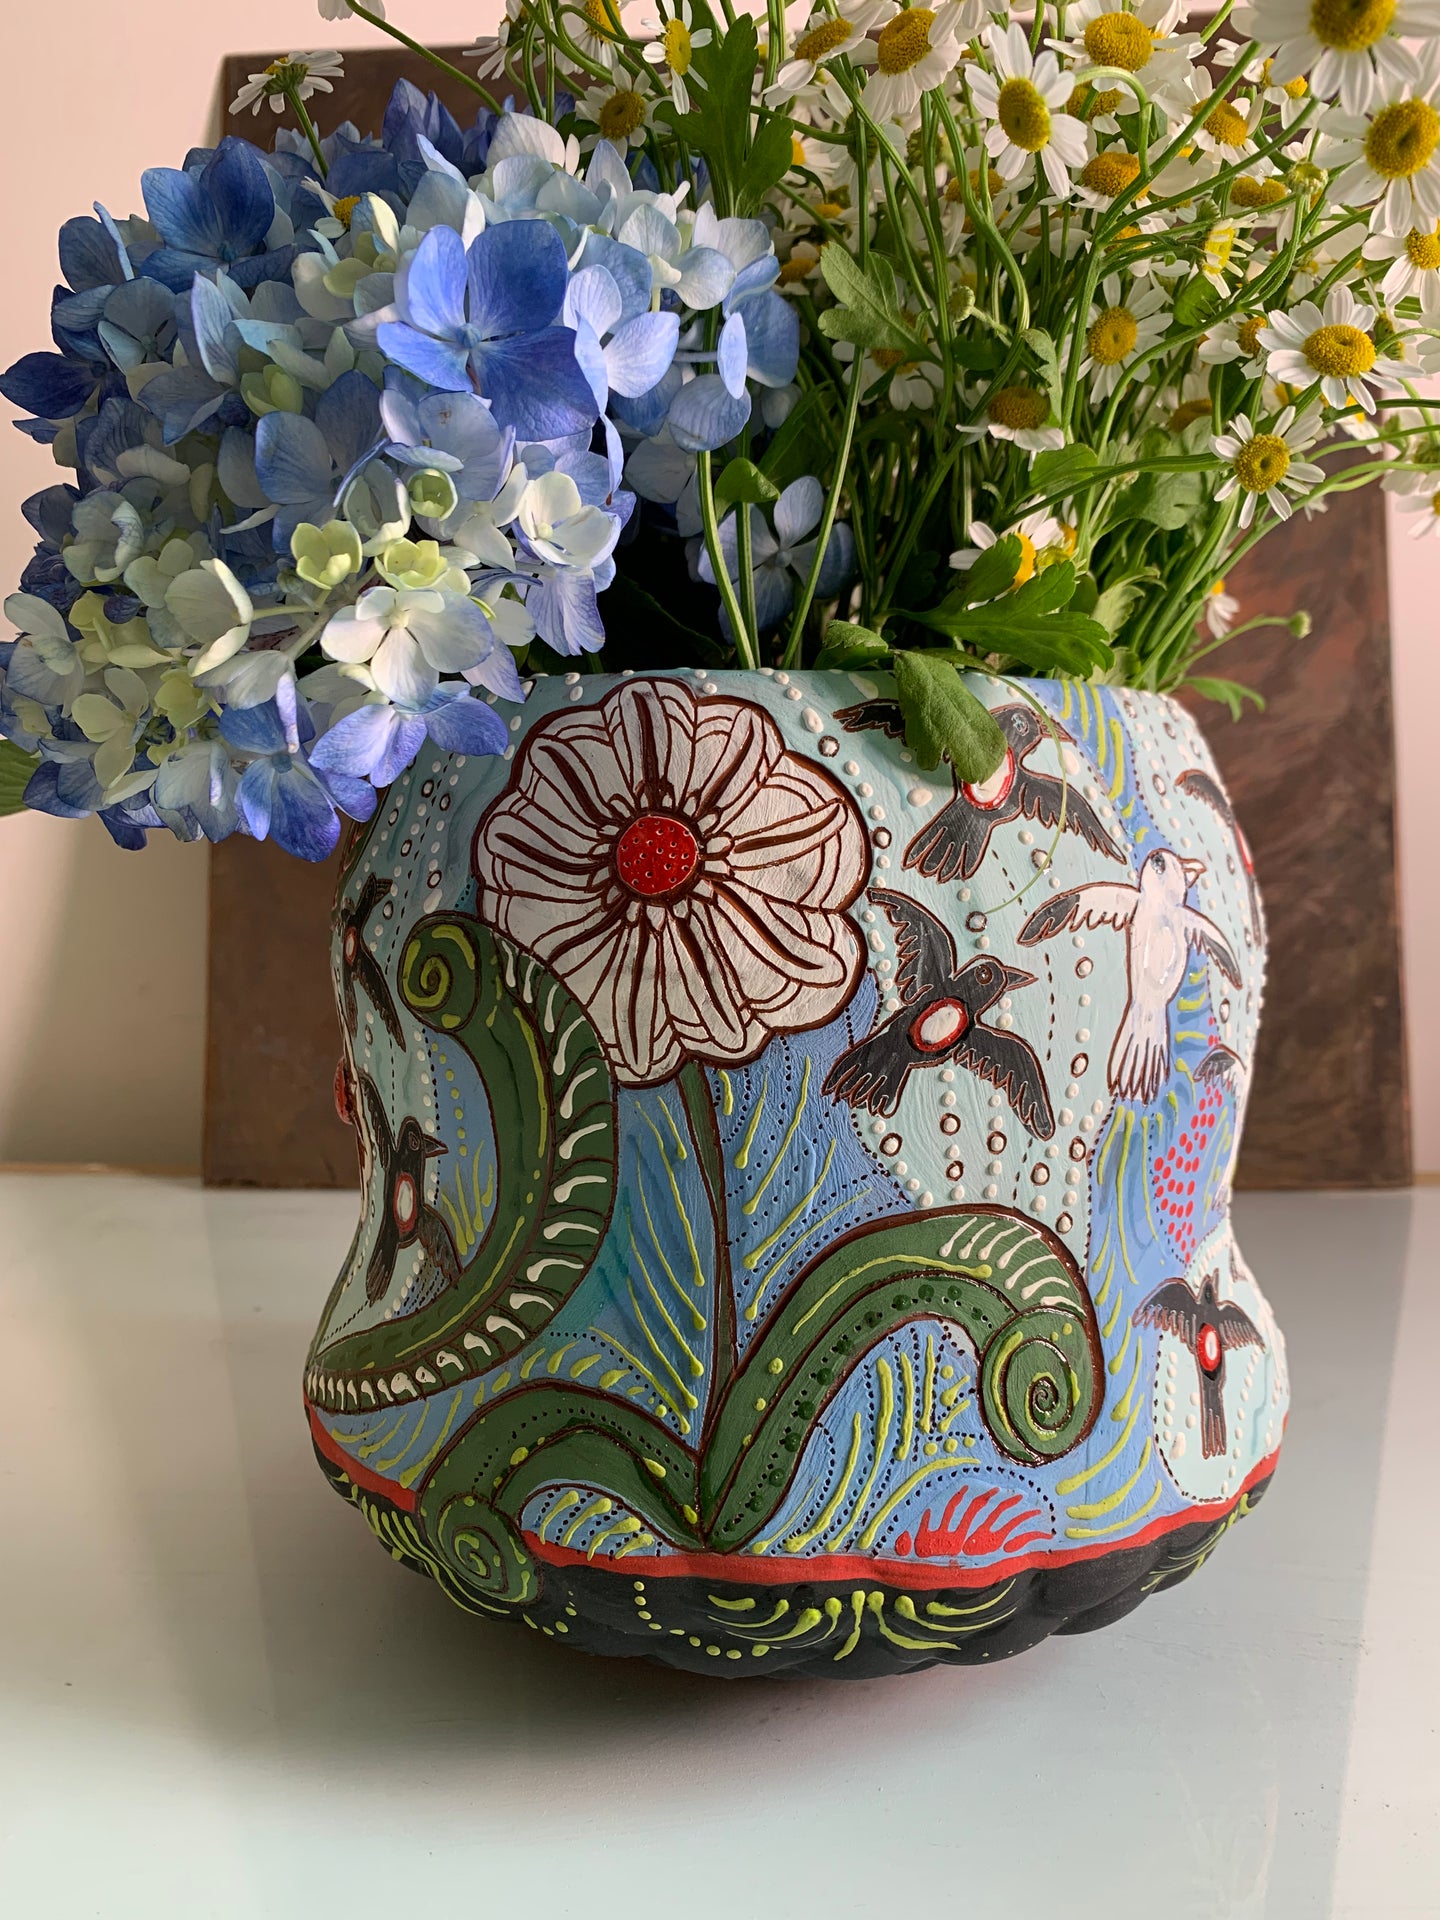 Flower and bird planter or vase